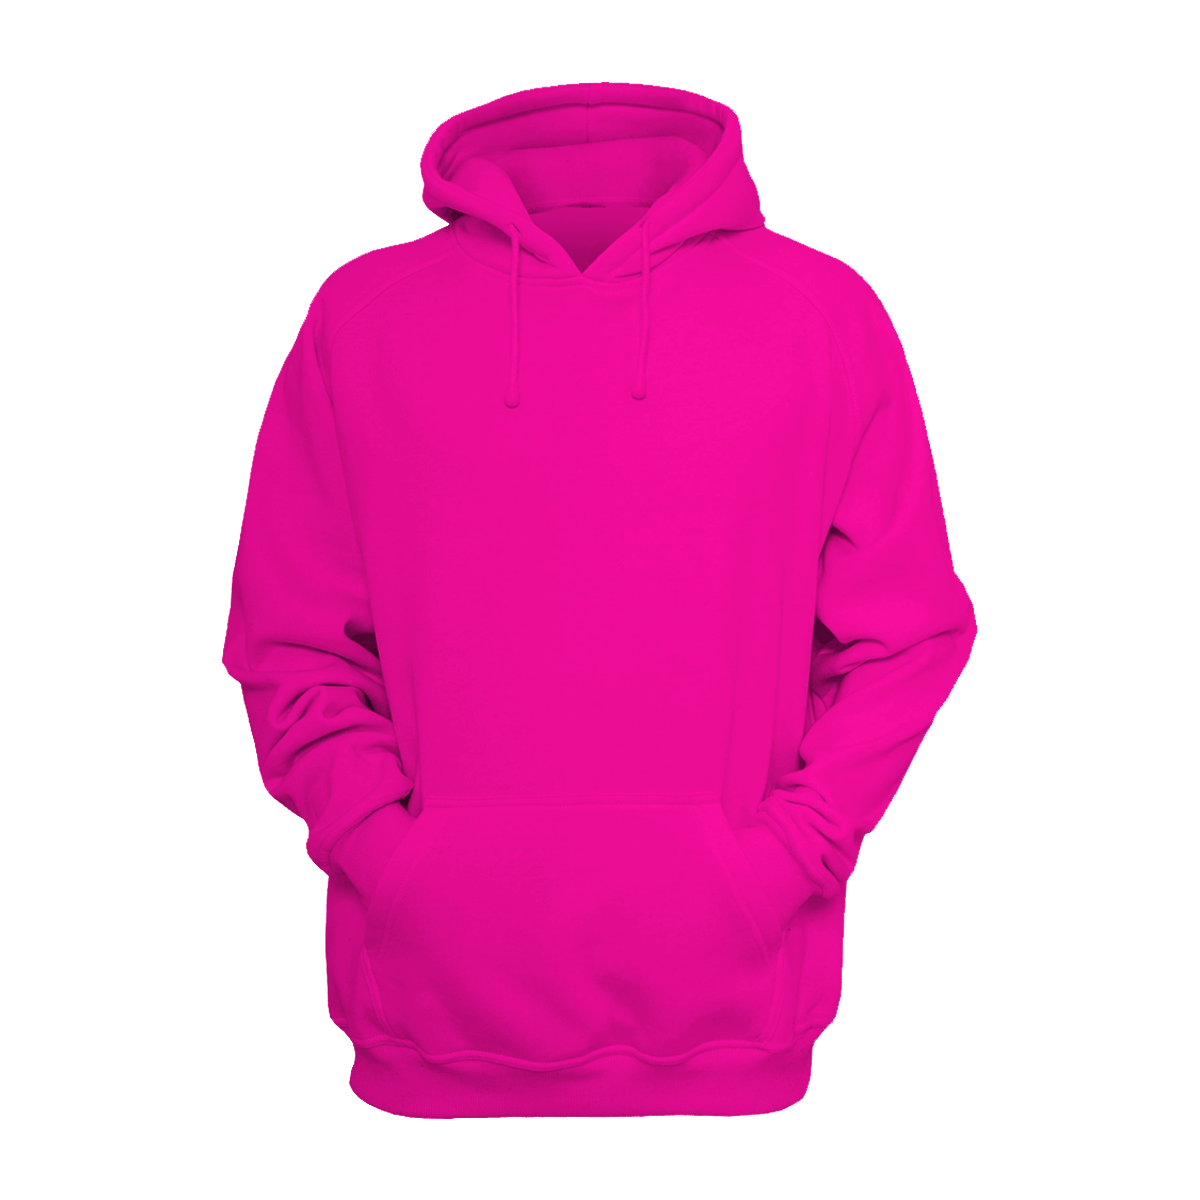 Pink Hoodie - High Quality Fleece